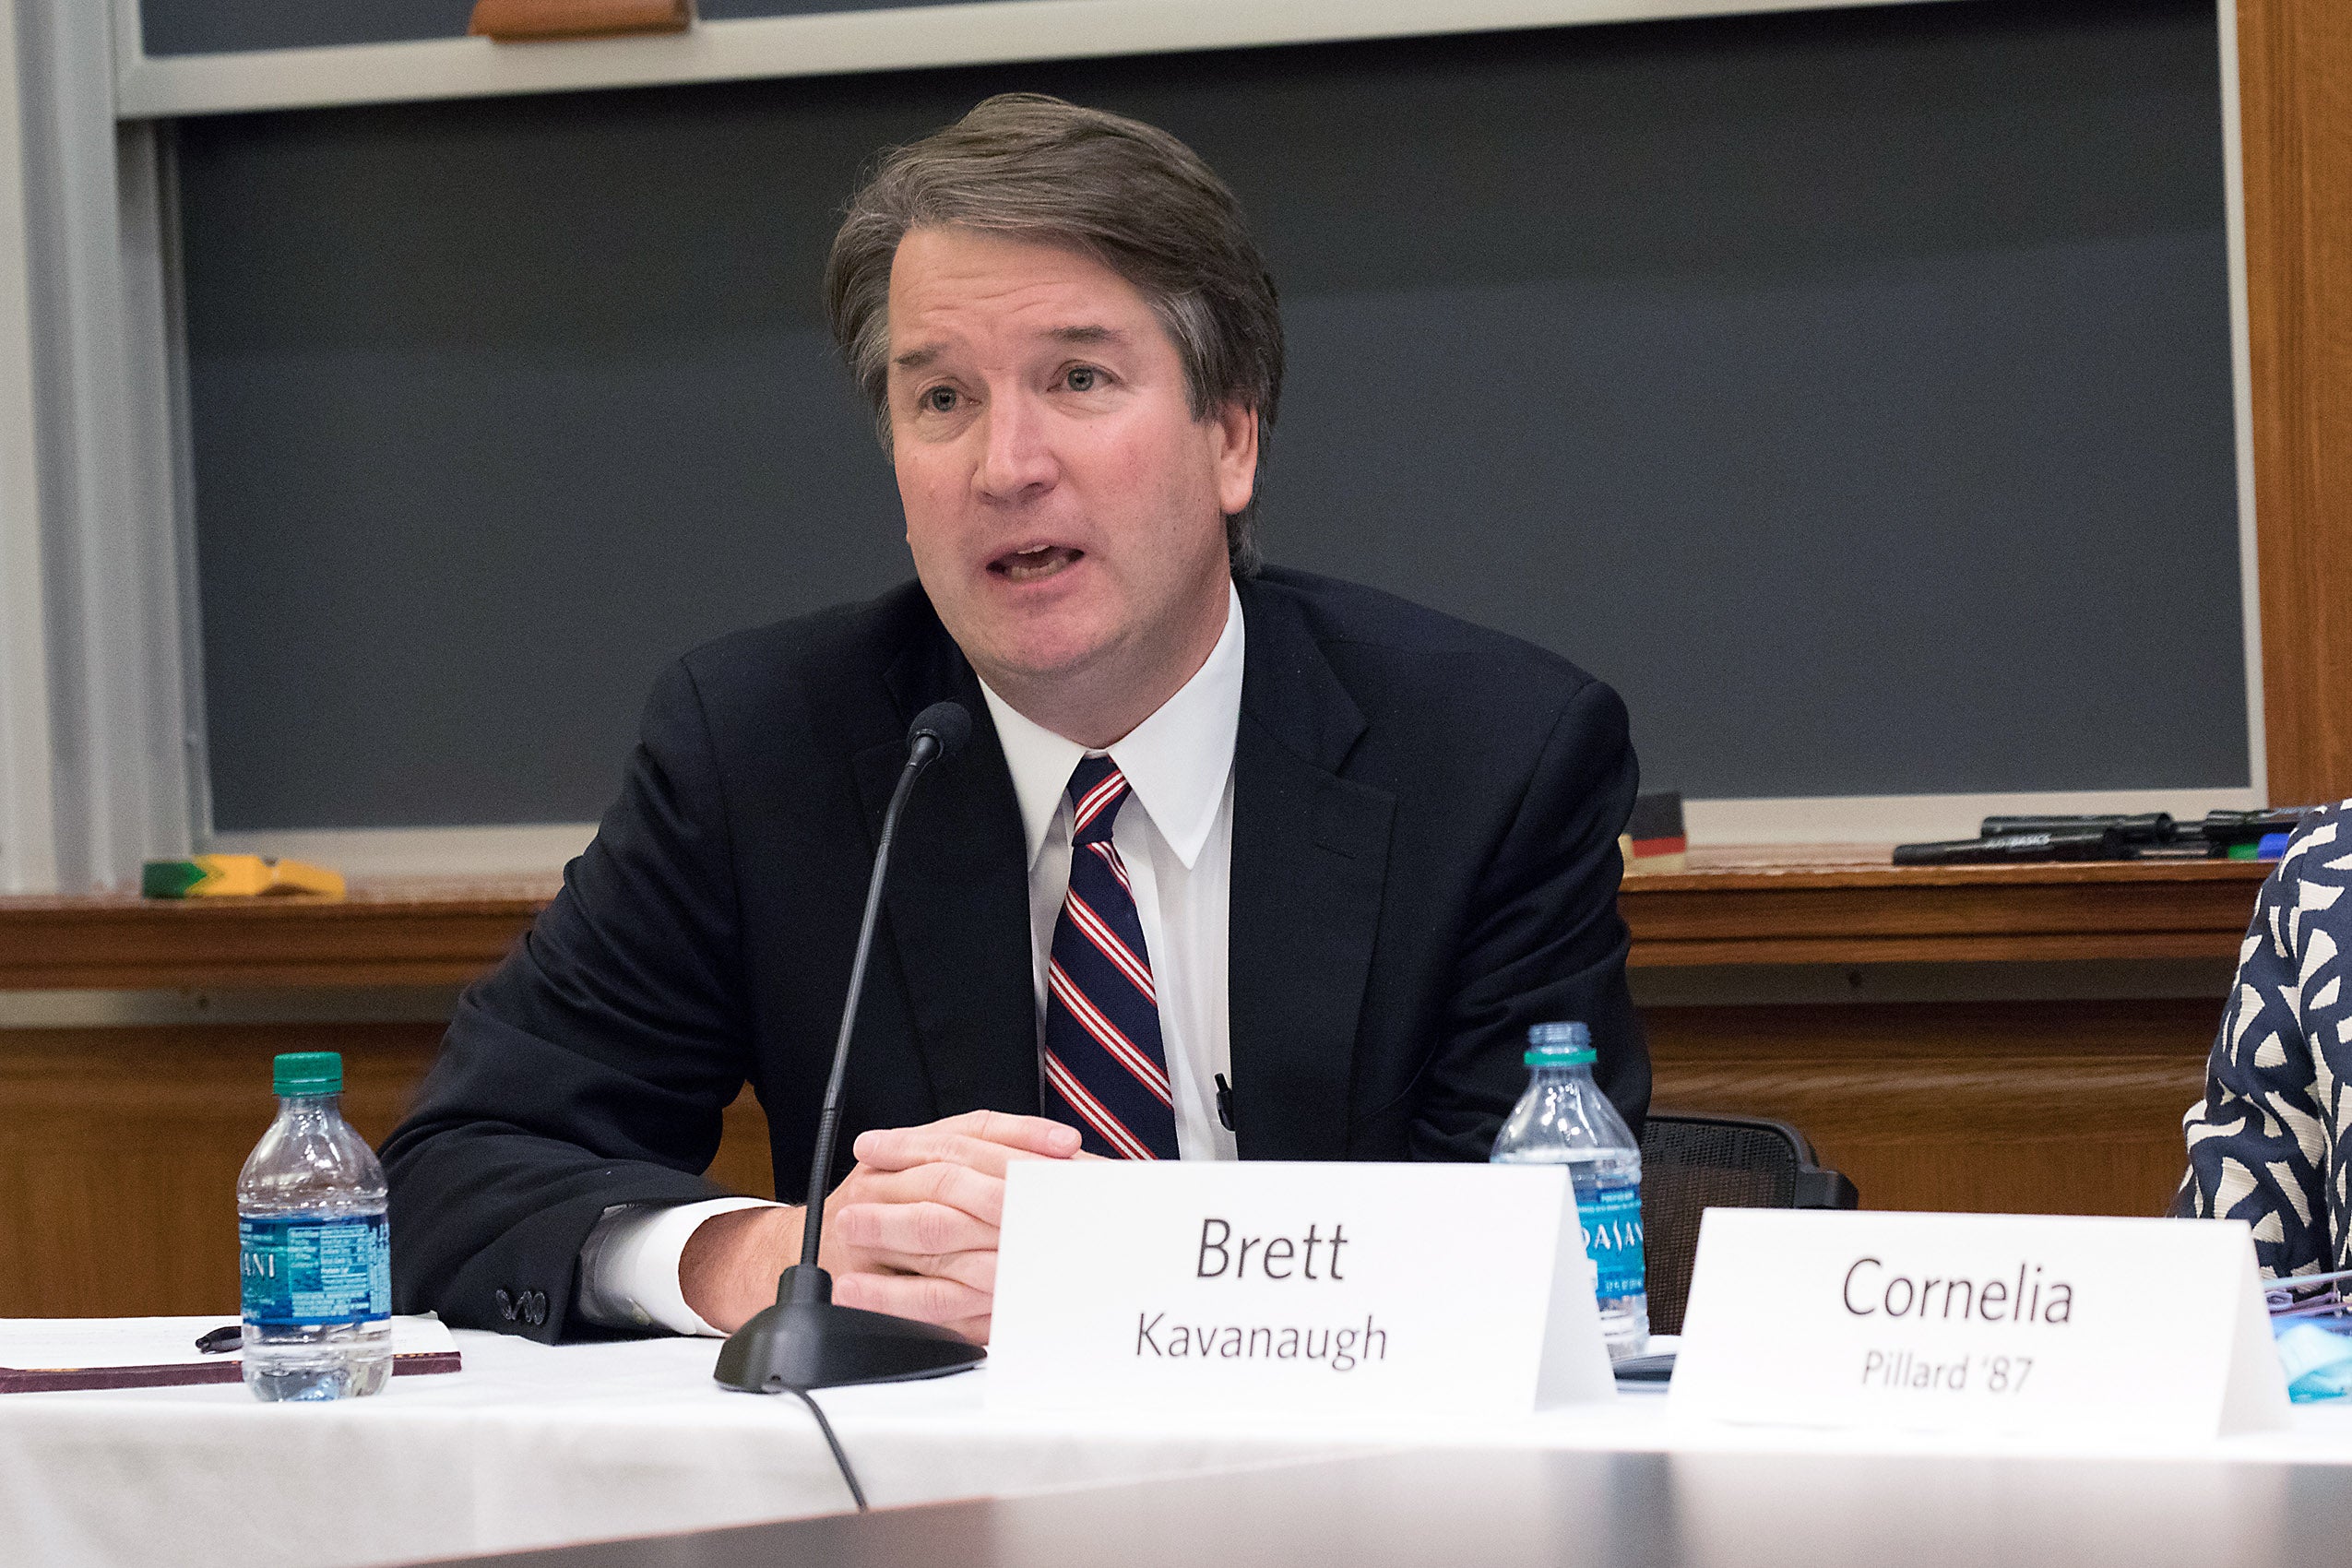 Longtime HLS lecturer Brett Kavanaugh nominated to U.S. Supreme Court